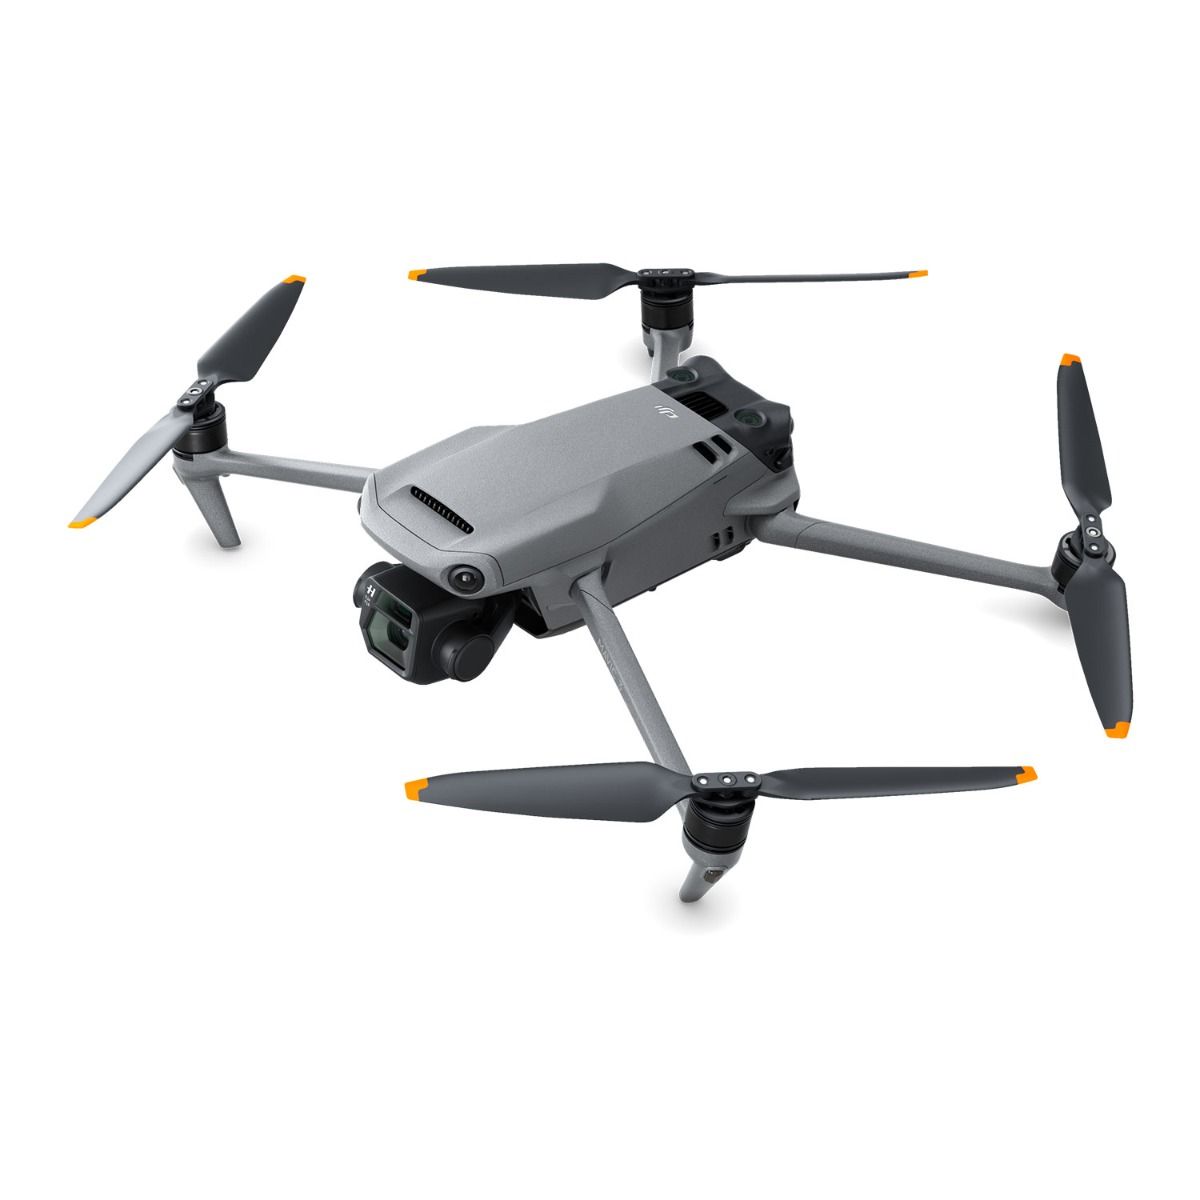 Drone DJI Mavic 3 Pro Fly More Combo + DJI RC (Versão Nacional) - FlyPro -  A melhor loja de Drones do Brasil!